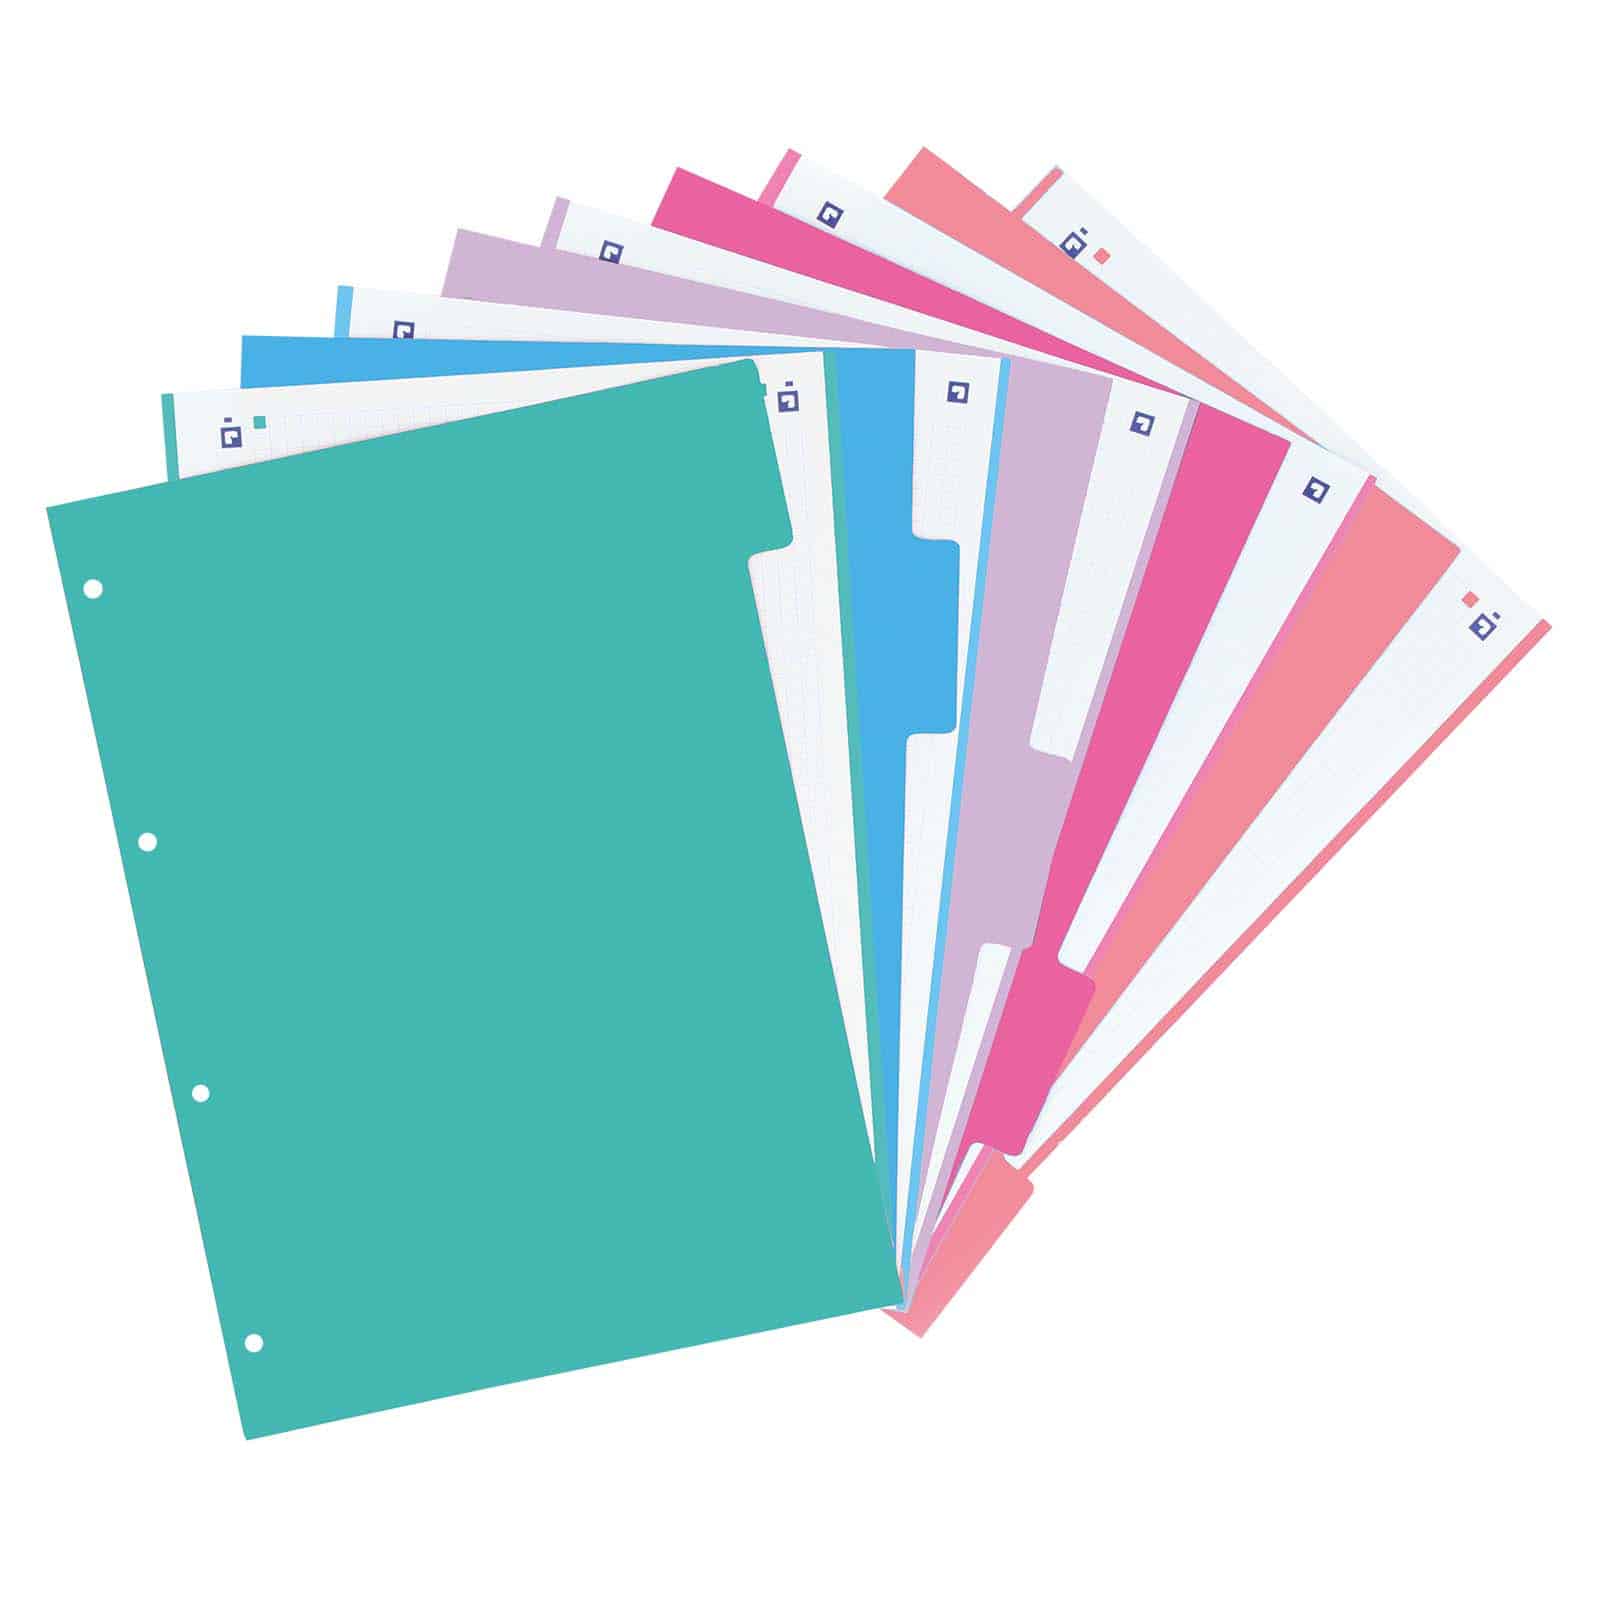 warmte vastleggen Prestigieus Oxford Tabbladen A4 - 5 pastel kleuren - Flashcards bestellen